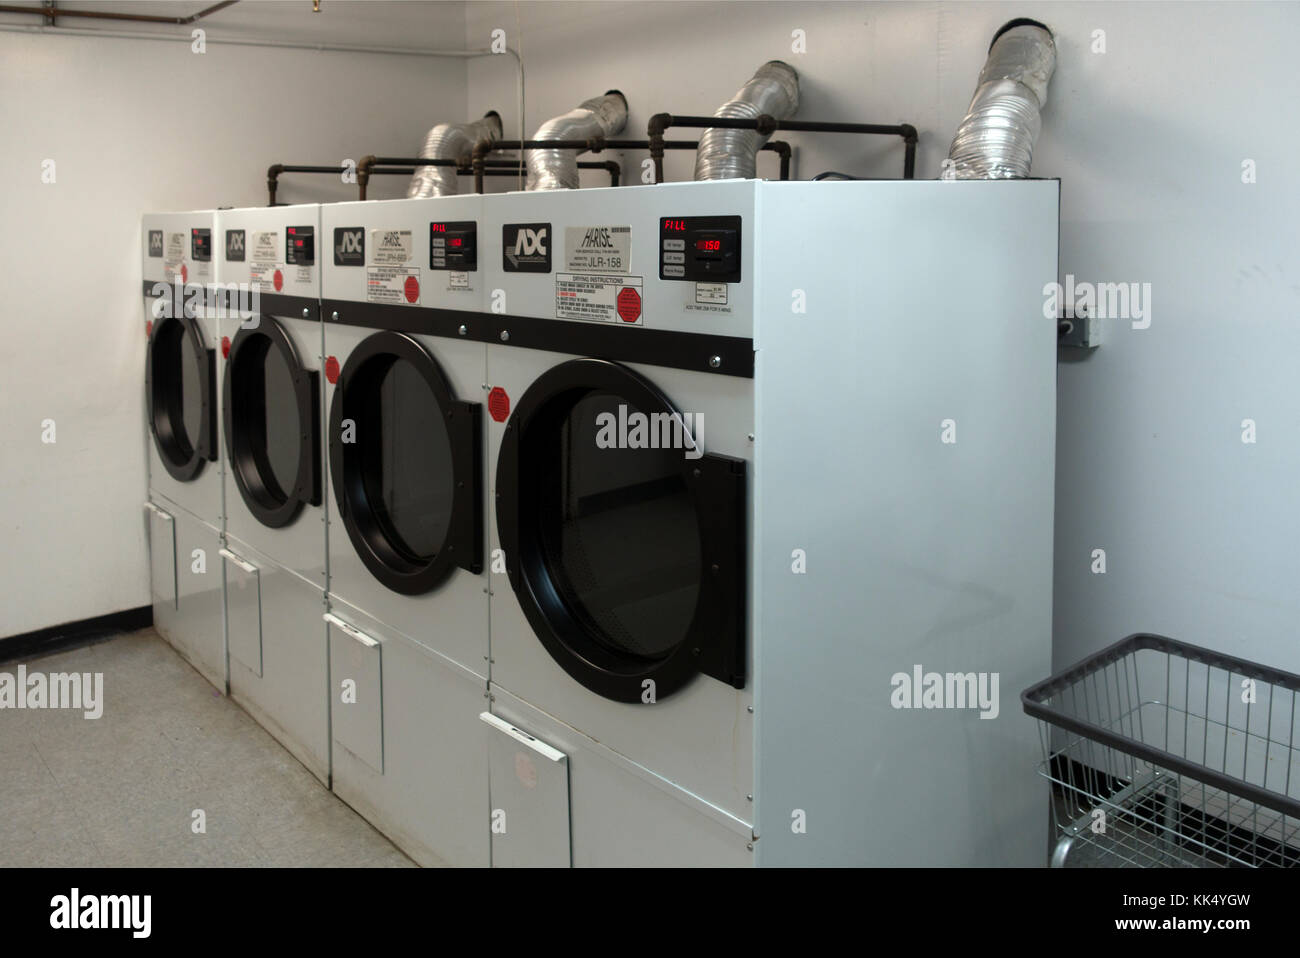 torre lavadora secadora electrolux - Buscar con Google  Laundry room  storage, Laundry center, Small laundry room organization